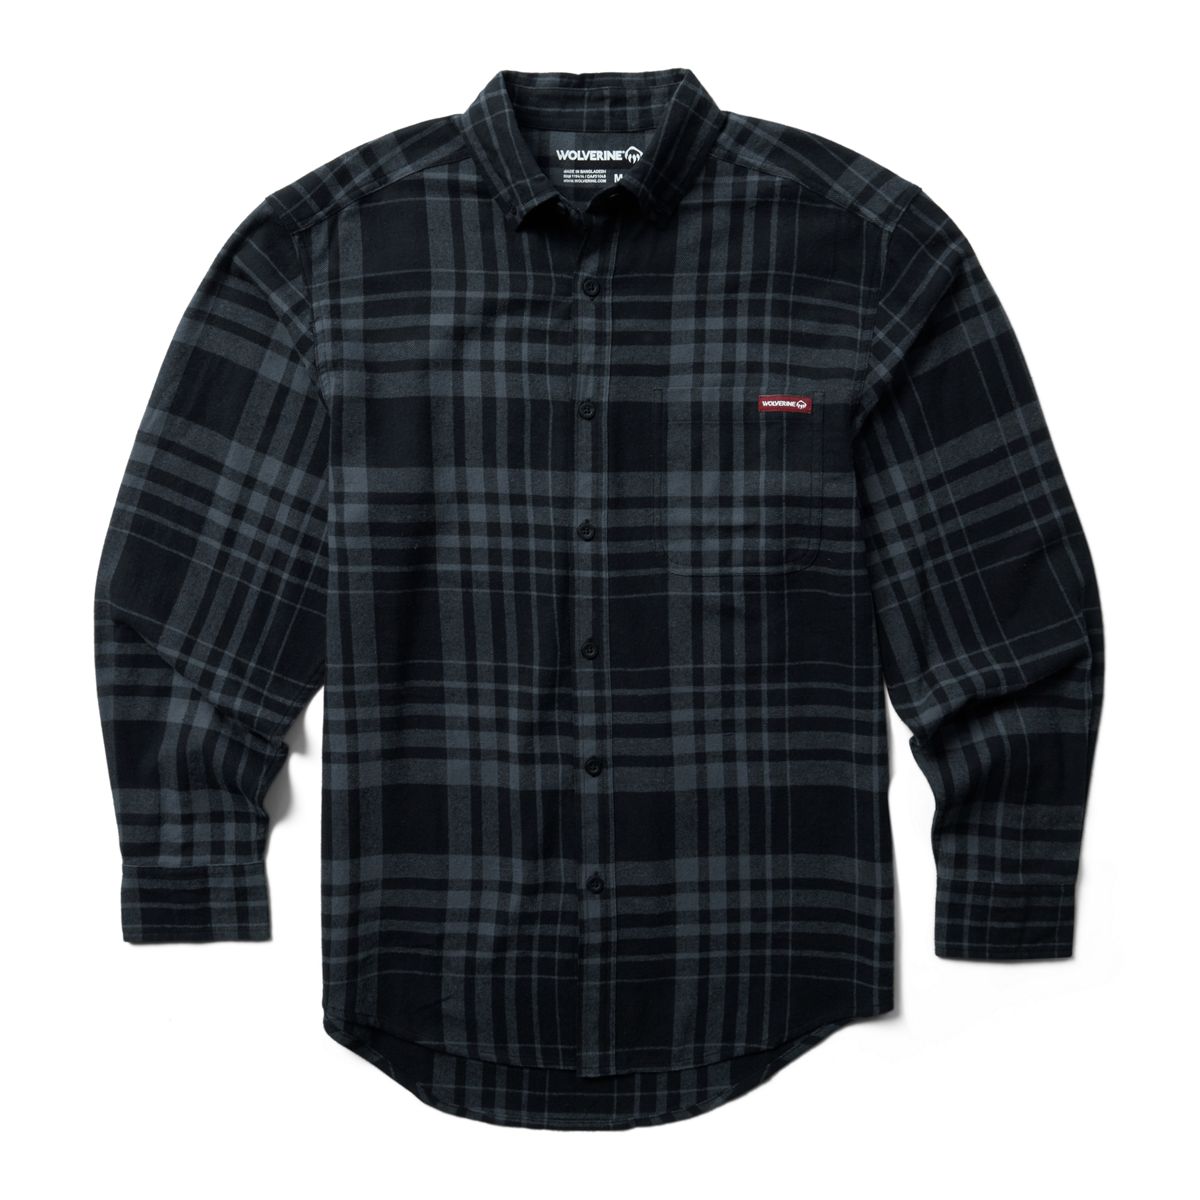 Pike Flannel Shirt, Black Out Plaid, dynamic